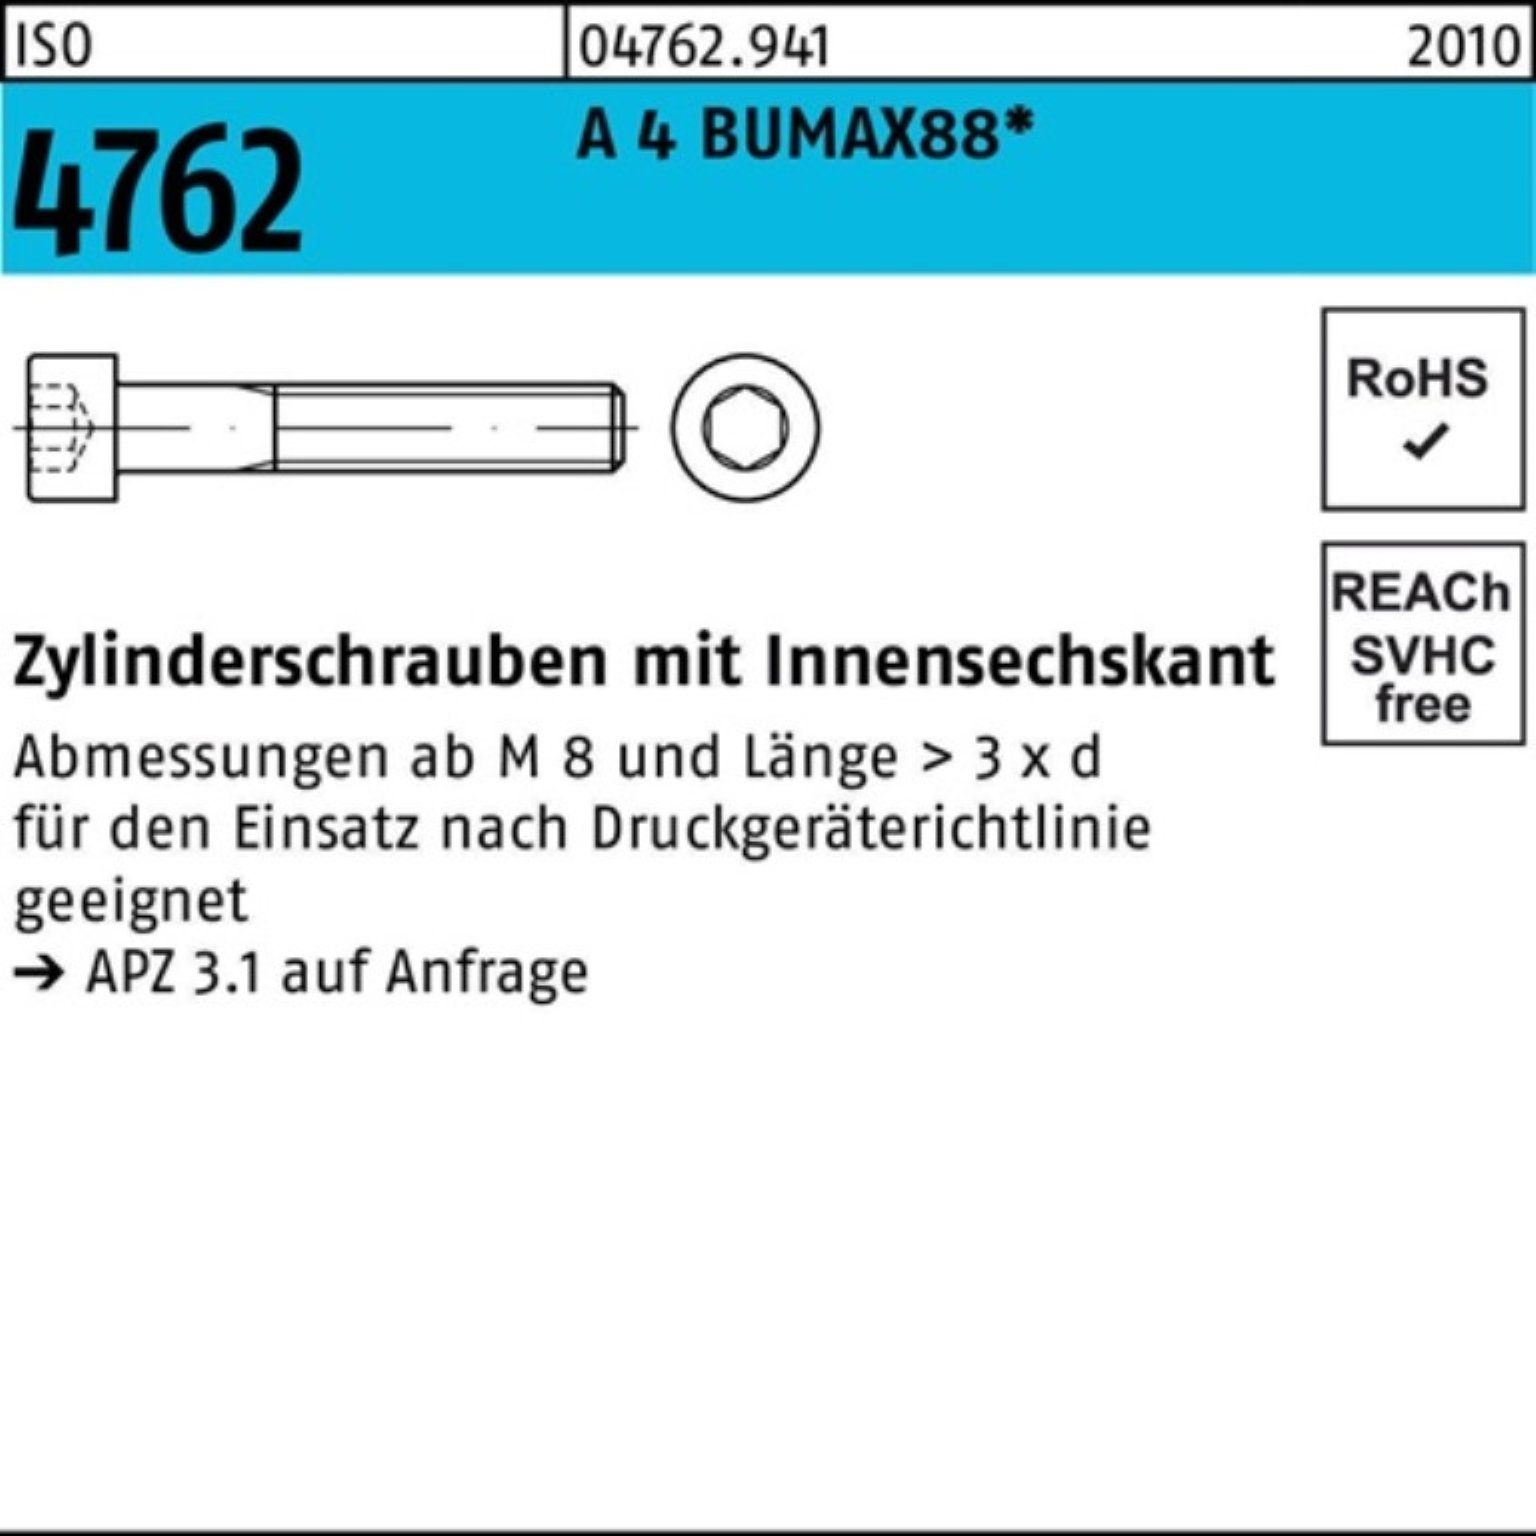 M6x Zylinderschraube Bufab Zylinderschraube ISO BUMAX88 Innen-6kt 40 4762 100er 100 Pack A 4